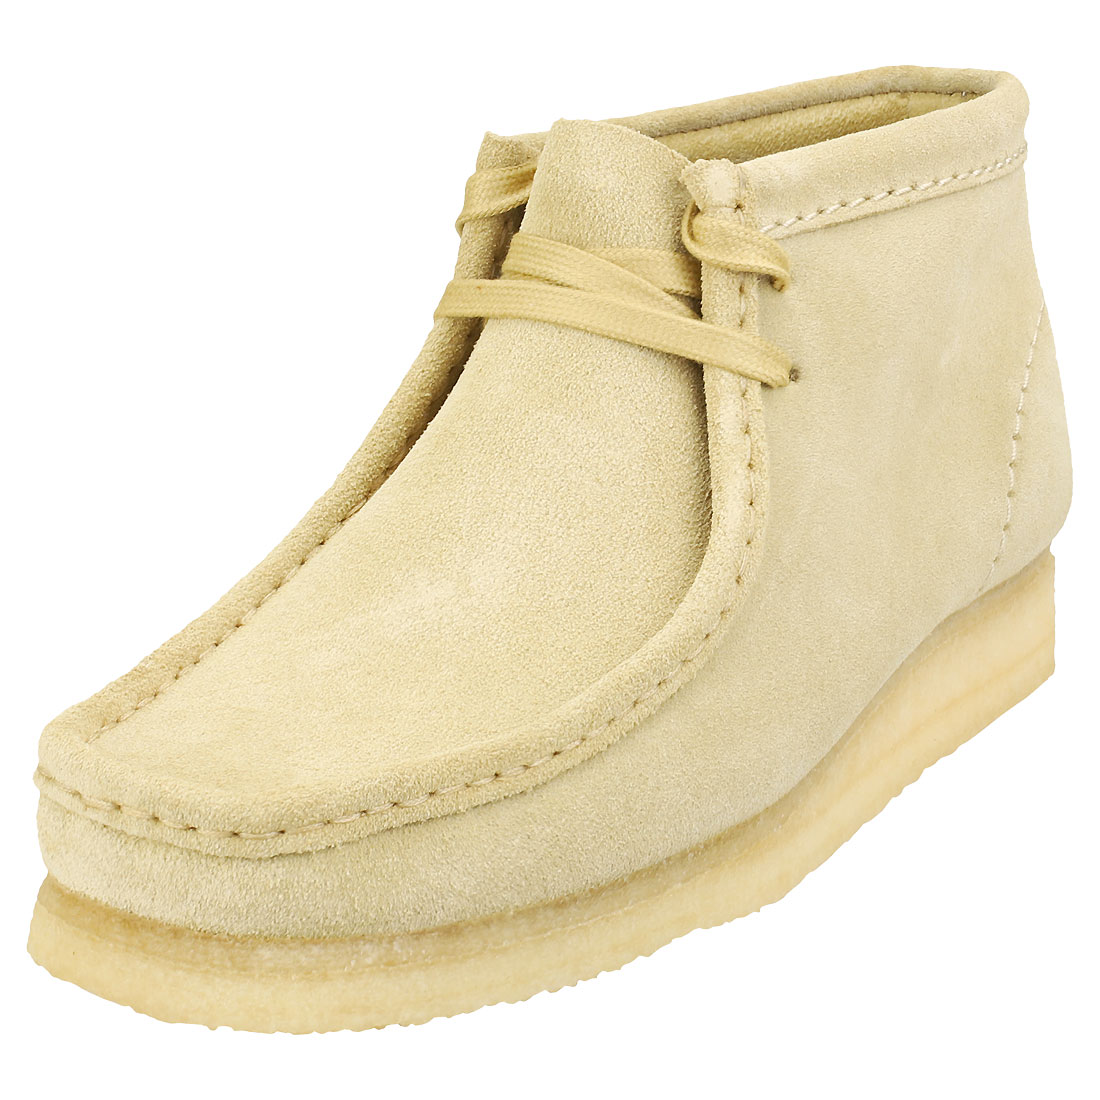 Clarks Originals Wallabee Boot Womens Maple Wallabee Boots - 7.5 UK | eBay